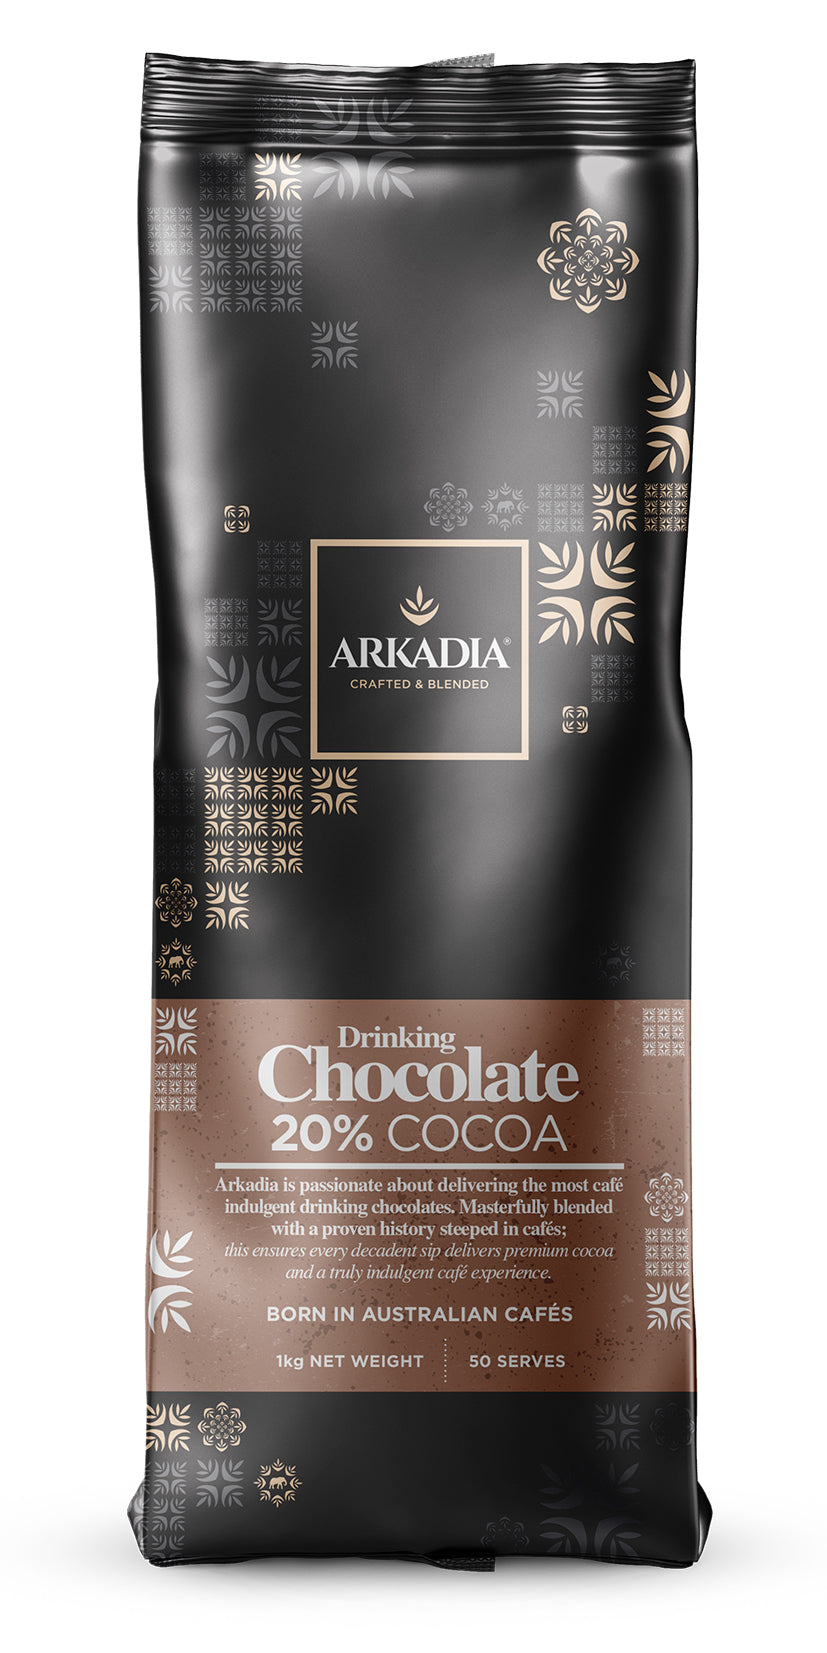 Drinking Chocolate 20% Cocoa